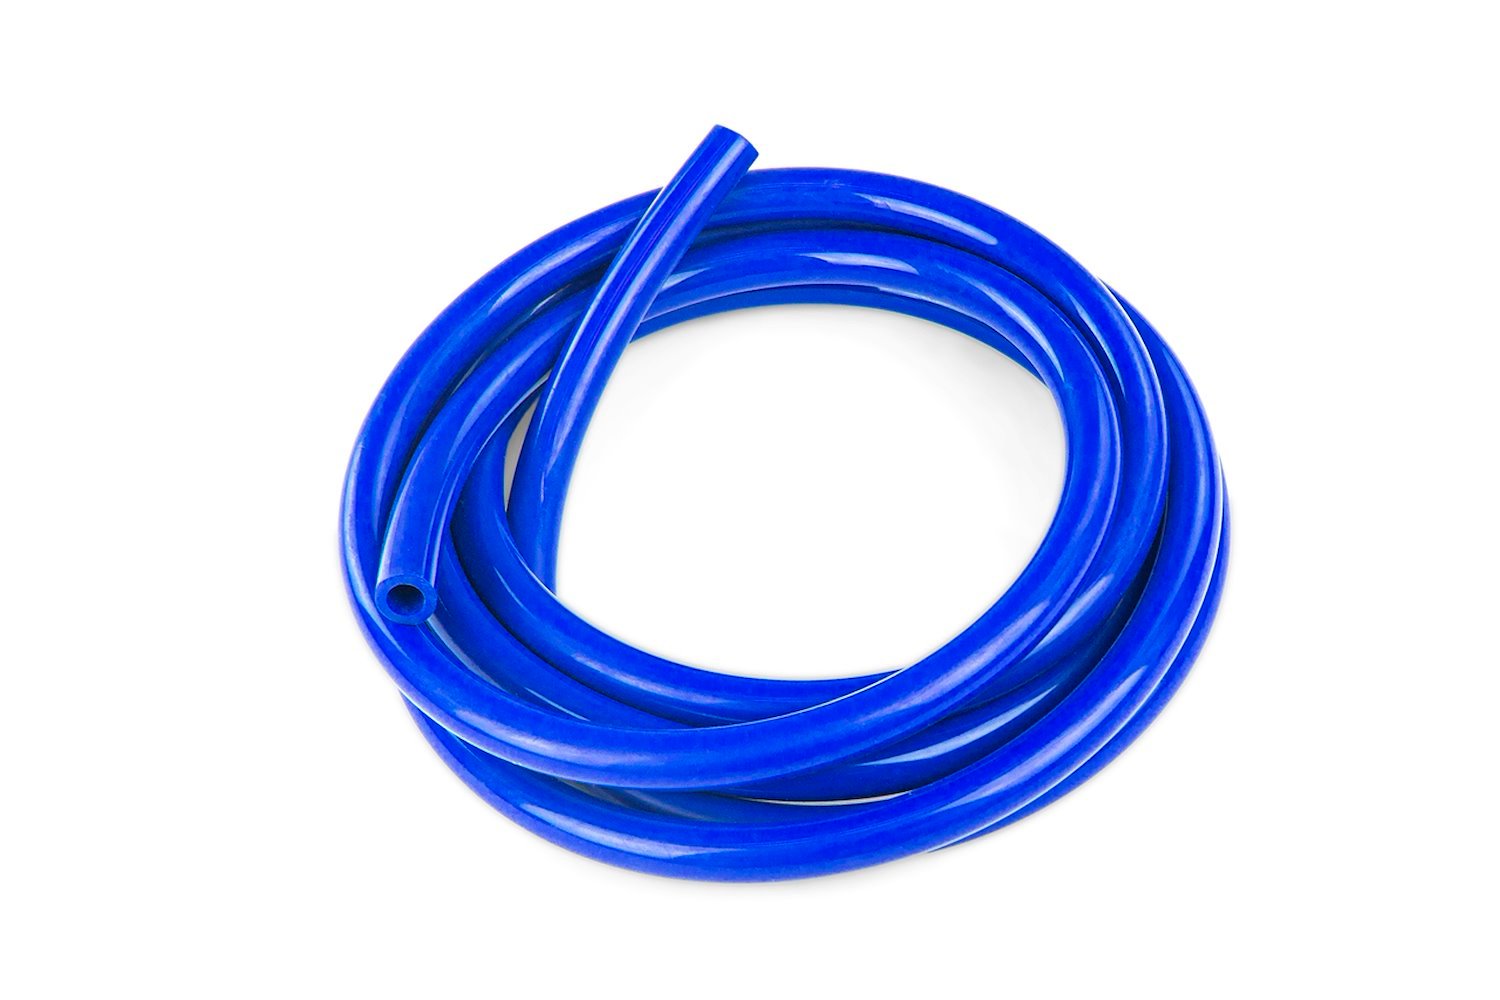 HTSVH6-BLUEx10 High-Temperature Silicone Vacuum Hose Tubing, 1/4 in. ID, 10 ft. Roll, Blue